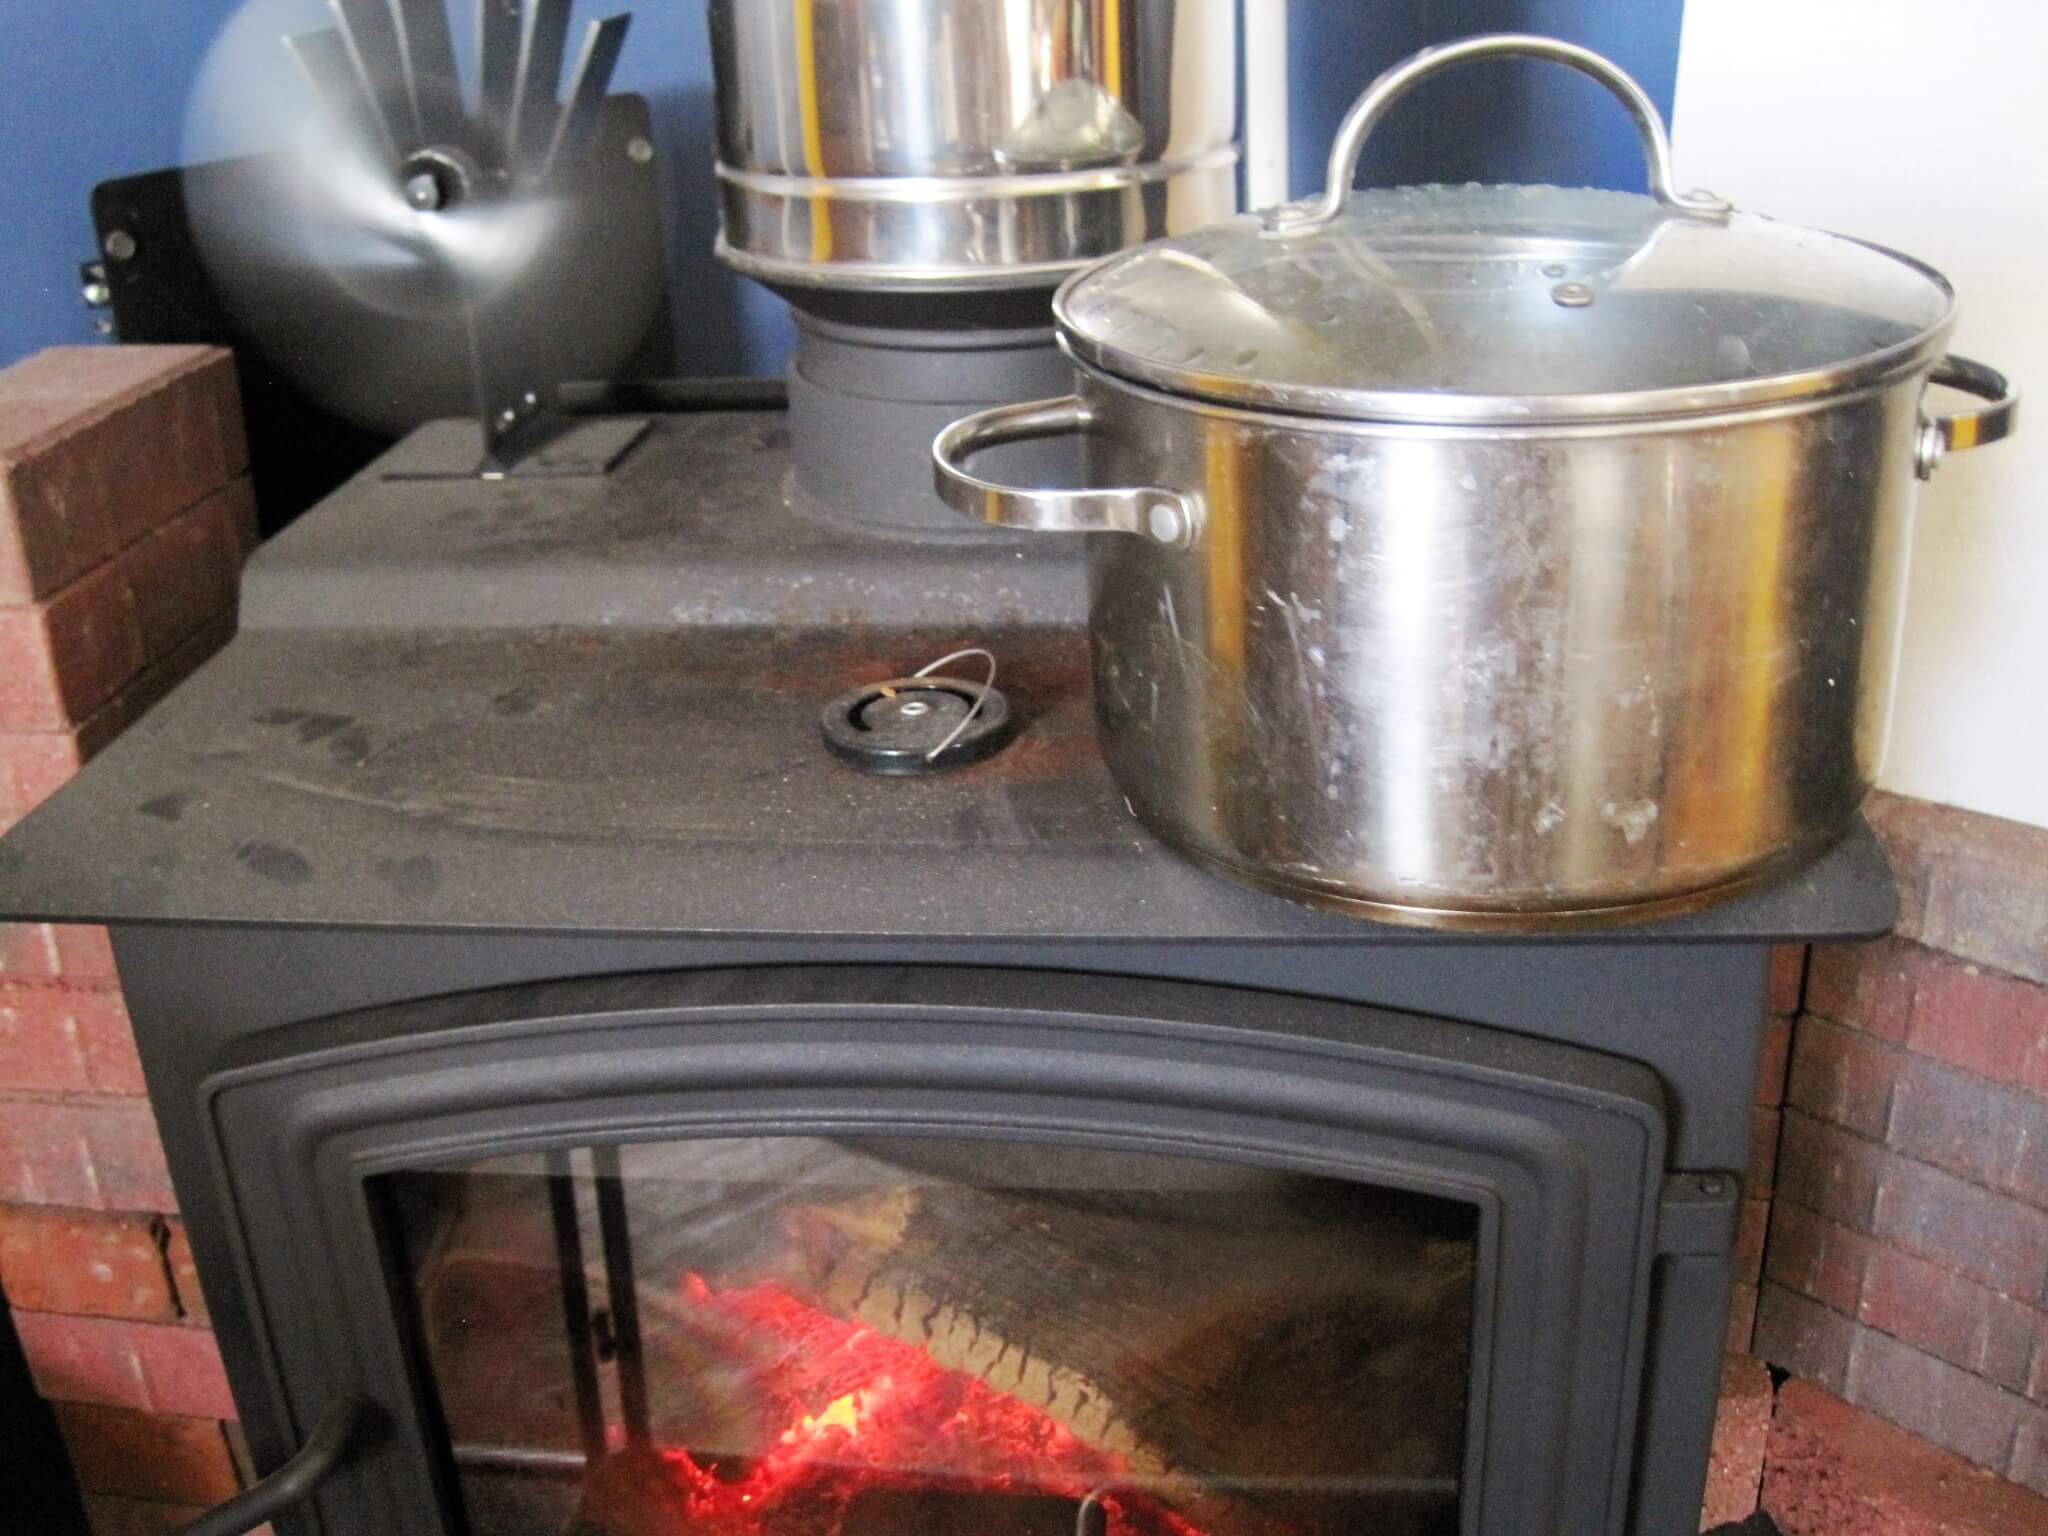 pot leaching acorns on wood burning stove